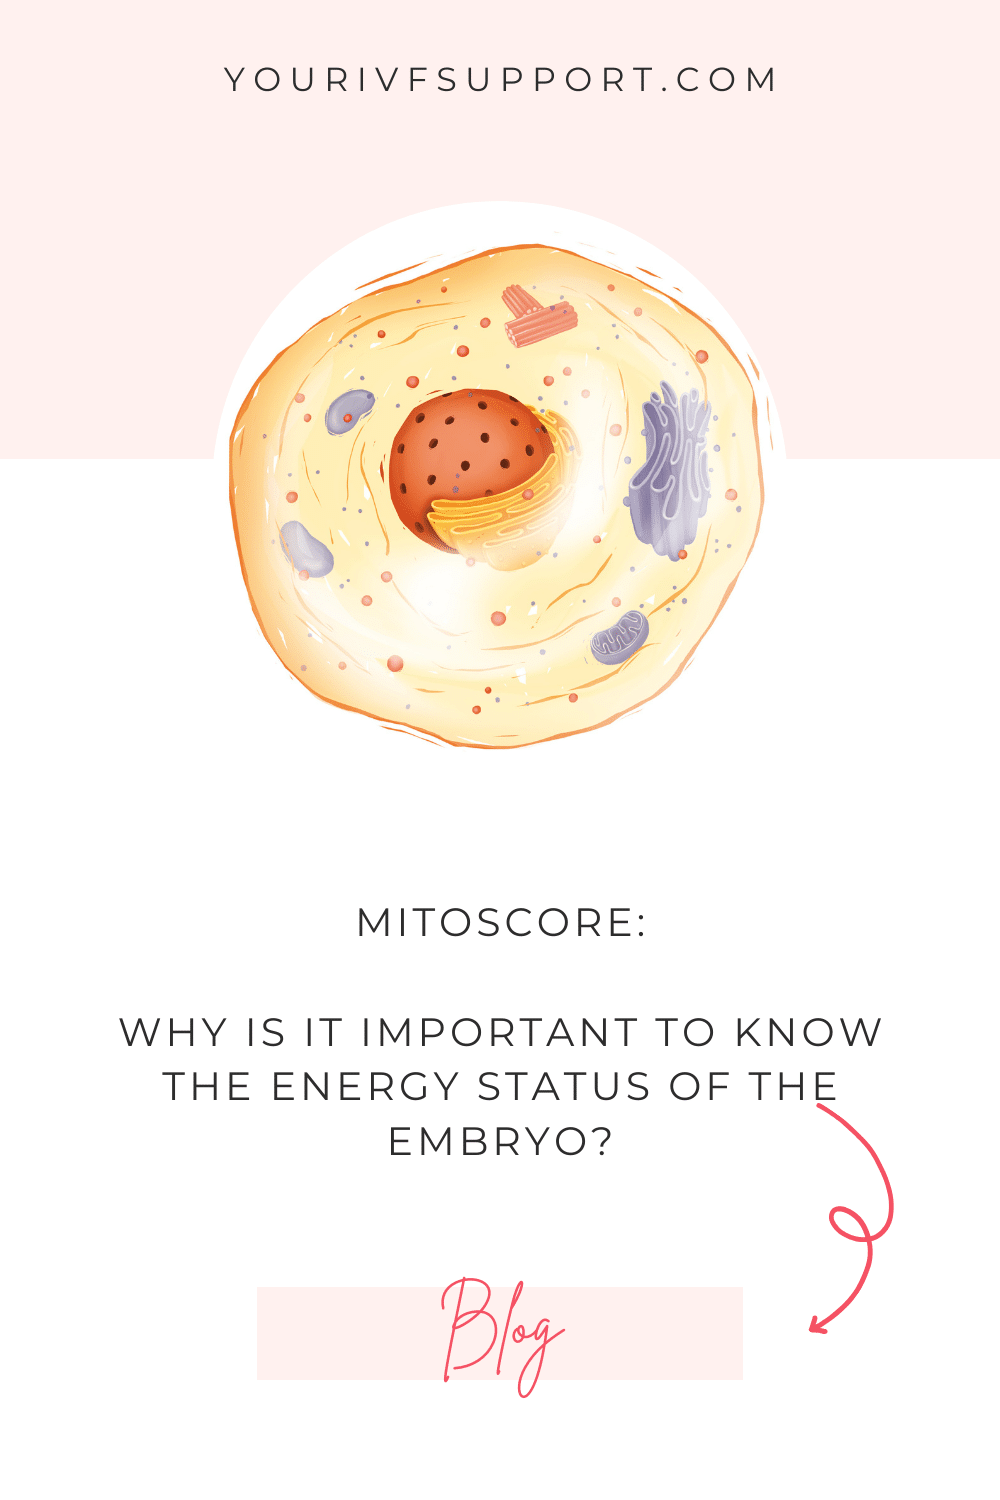 Mitoscore and Embryo Energy Status